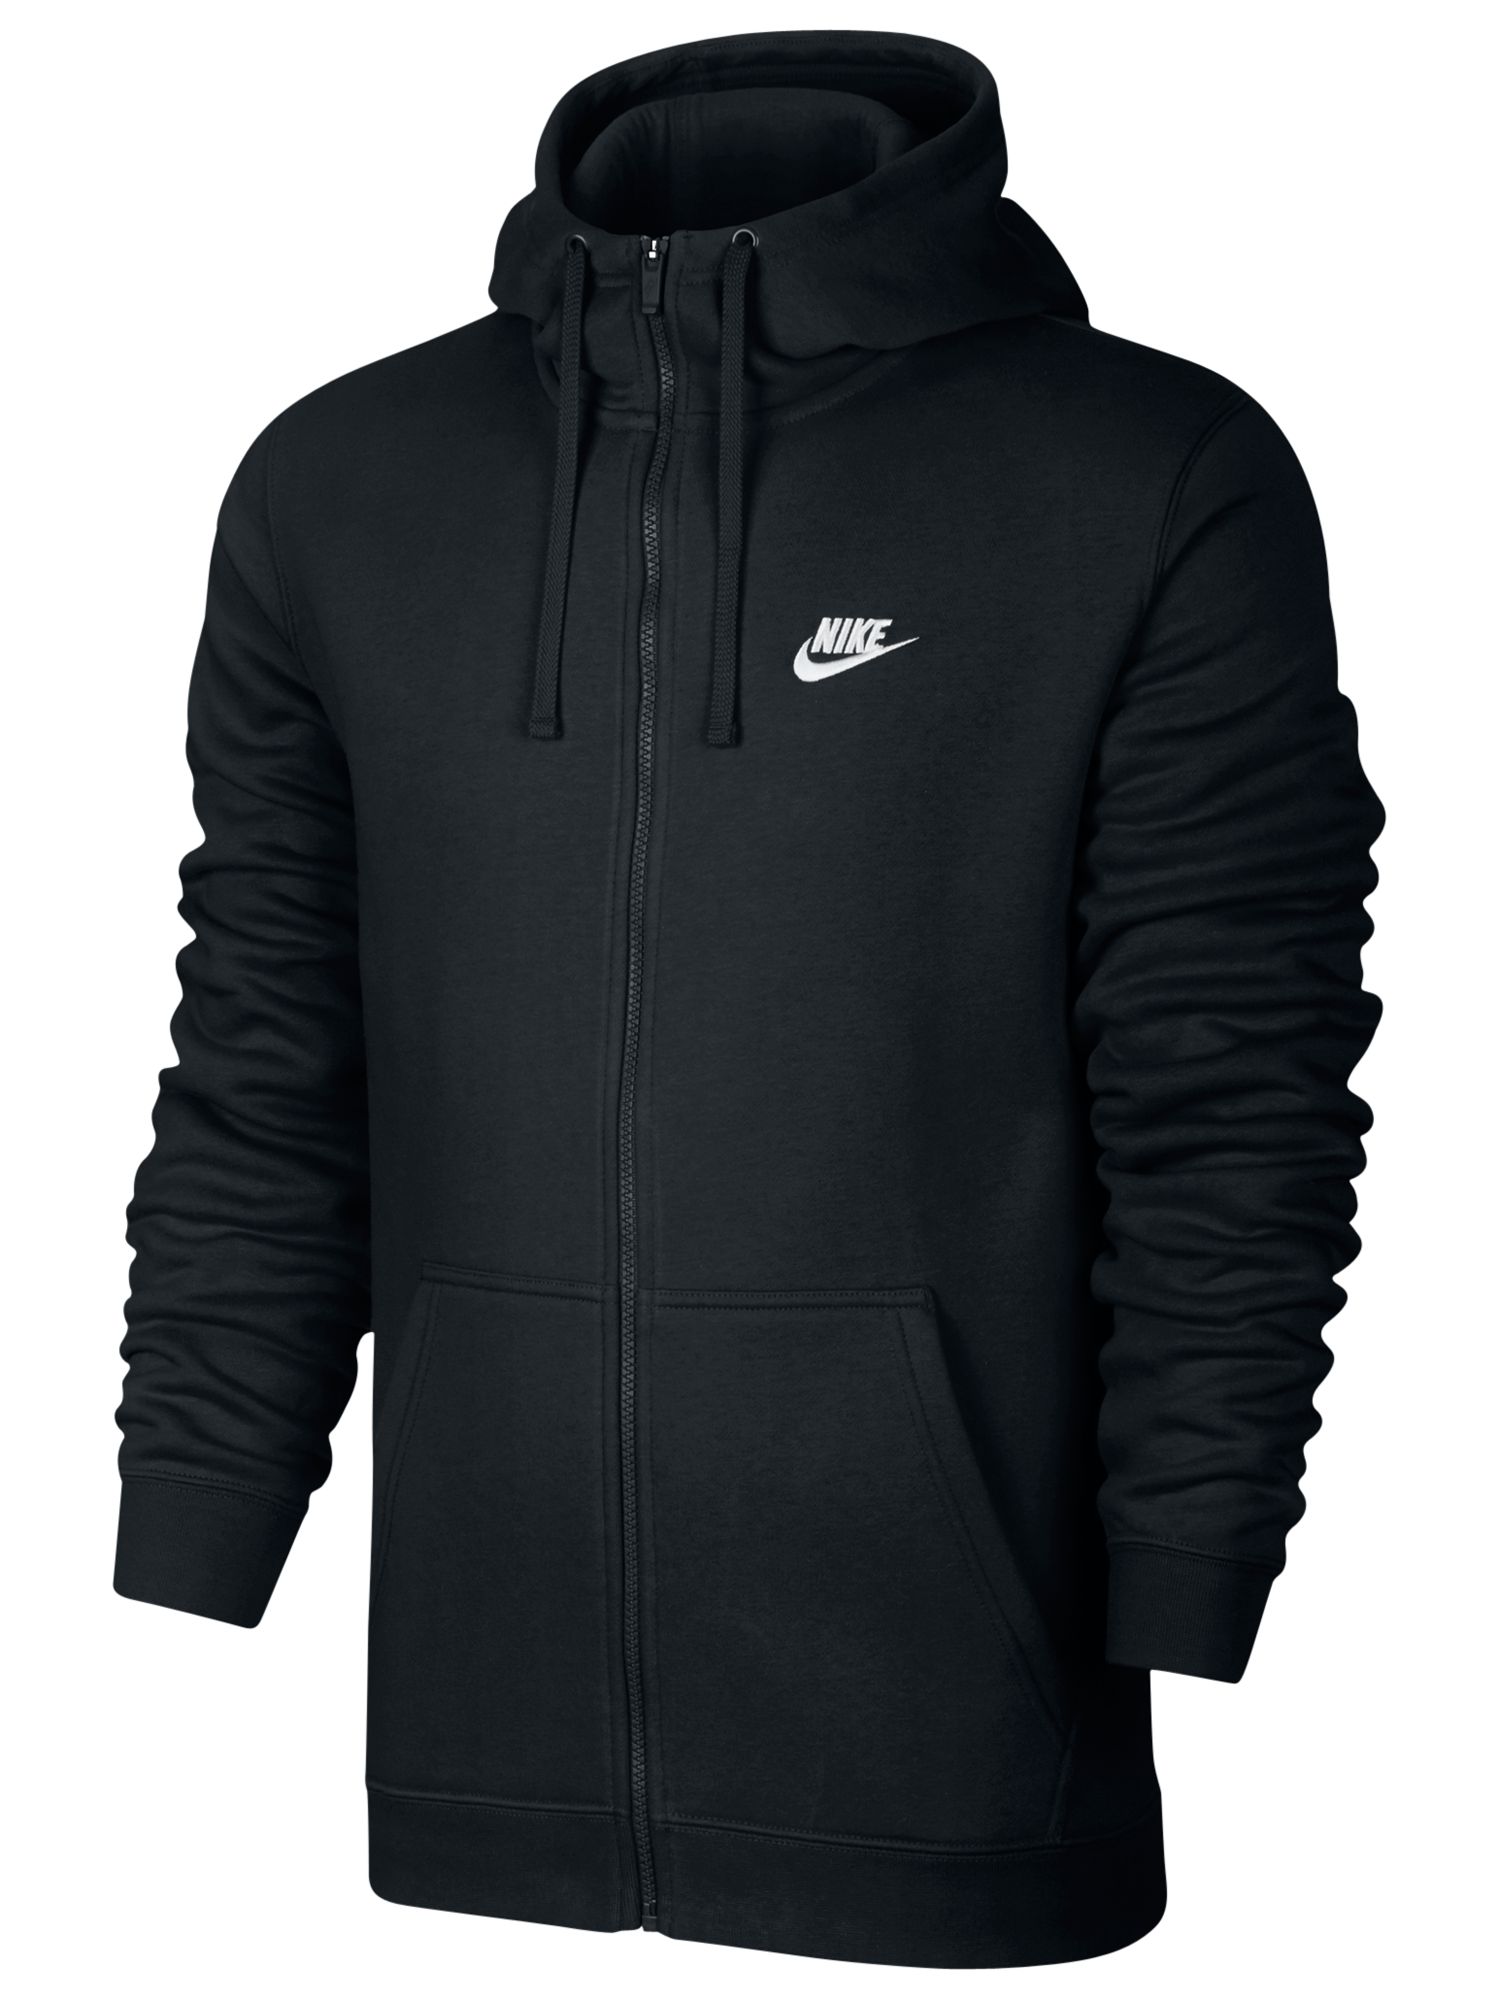 Nike Sportswear Hoodie, Black/White, XL